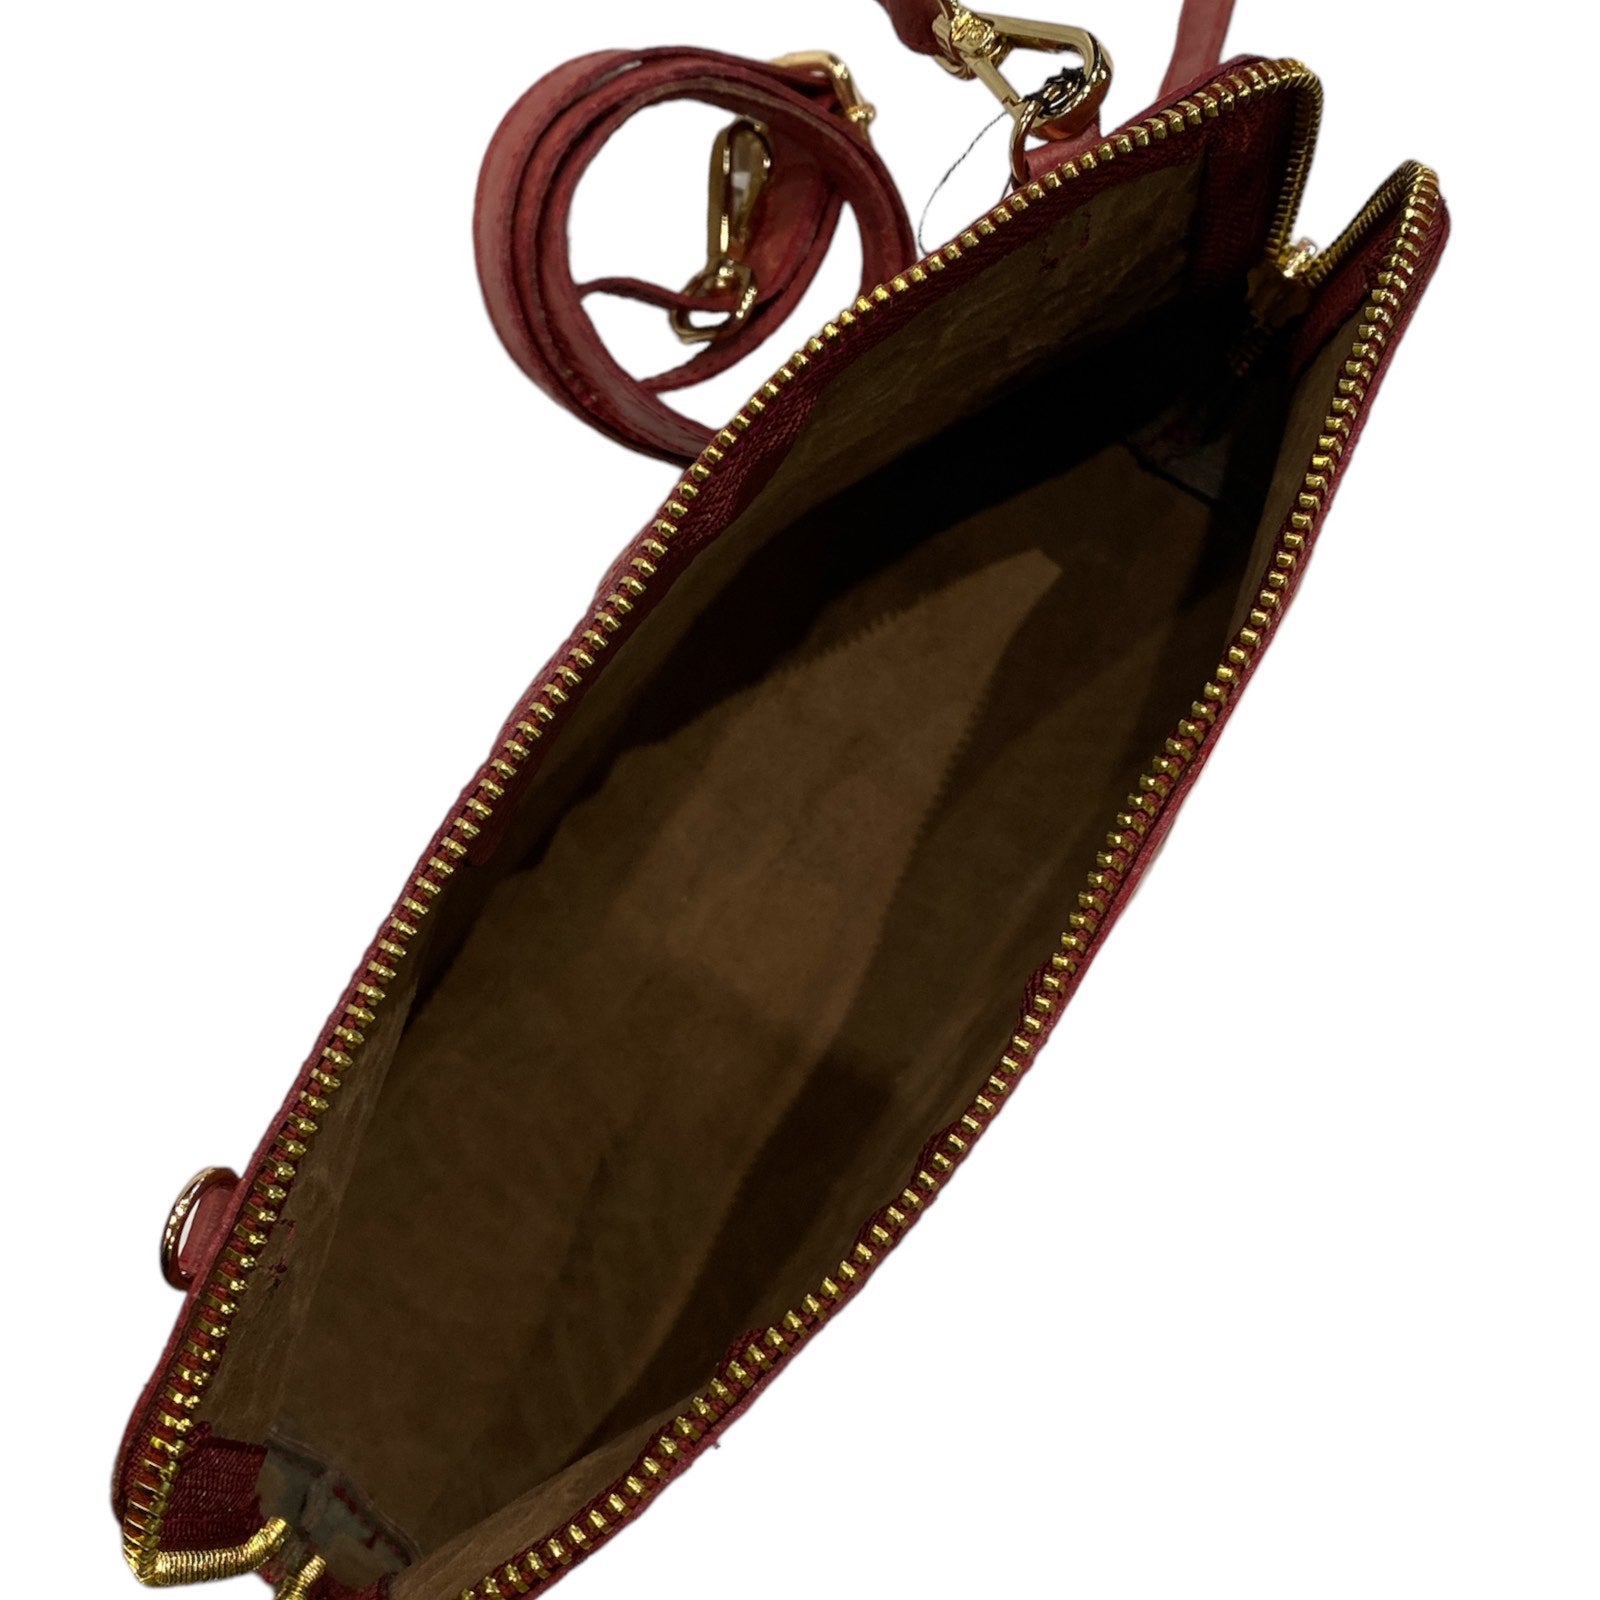 Box XL. Red wine alligator-print leather messenger bag